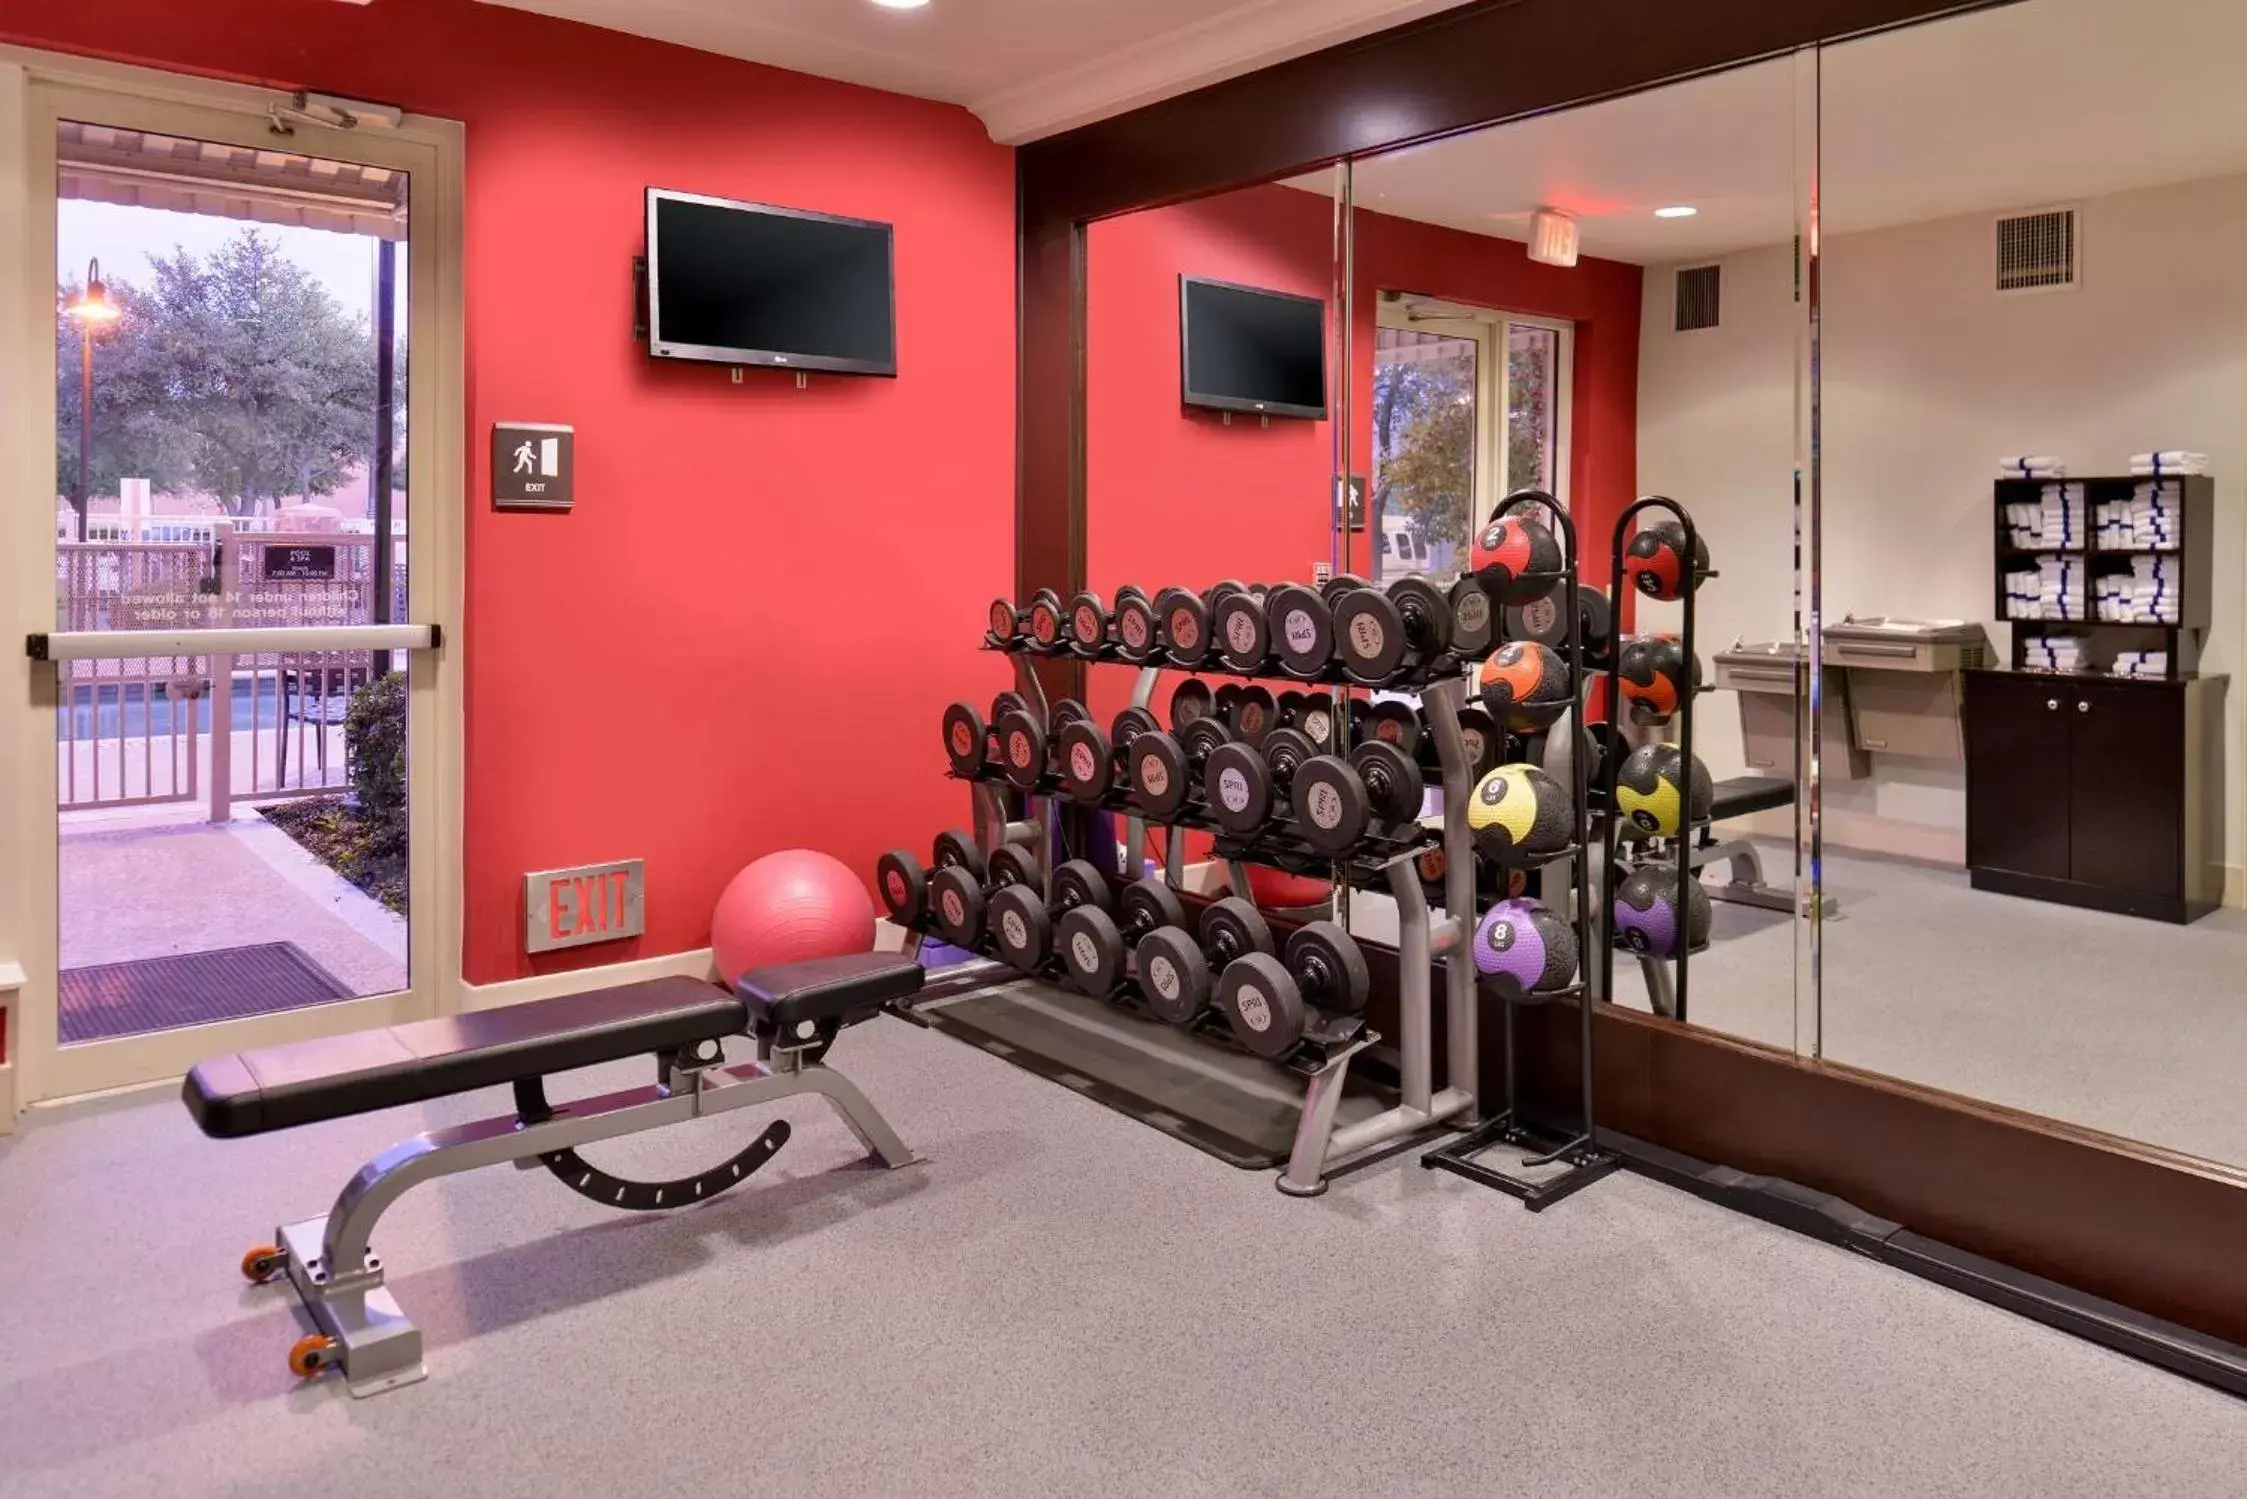 Fitness centre/facilities, Fitness Center/Facilities in Hilton Garden Inn Addison